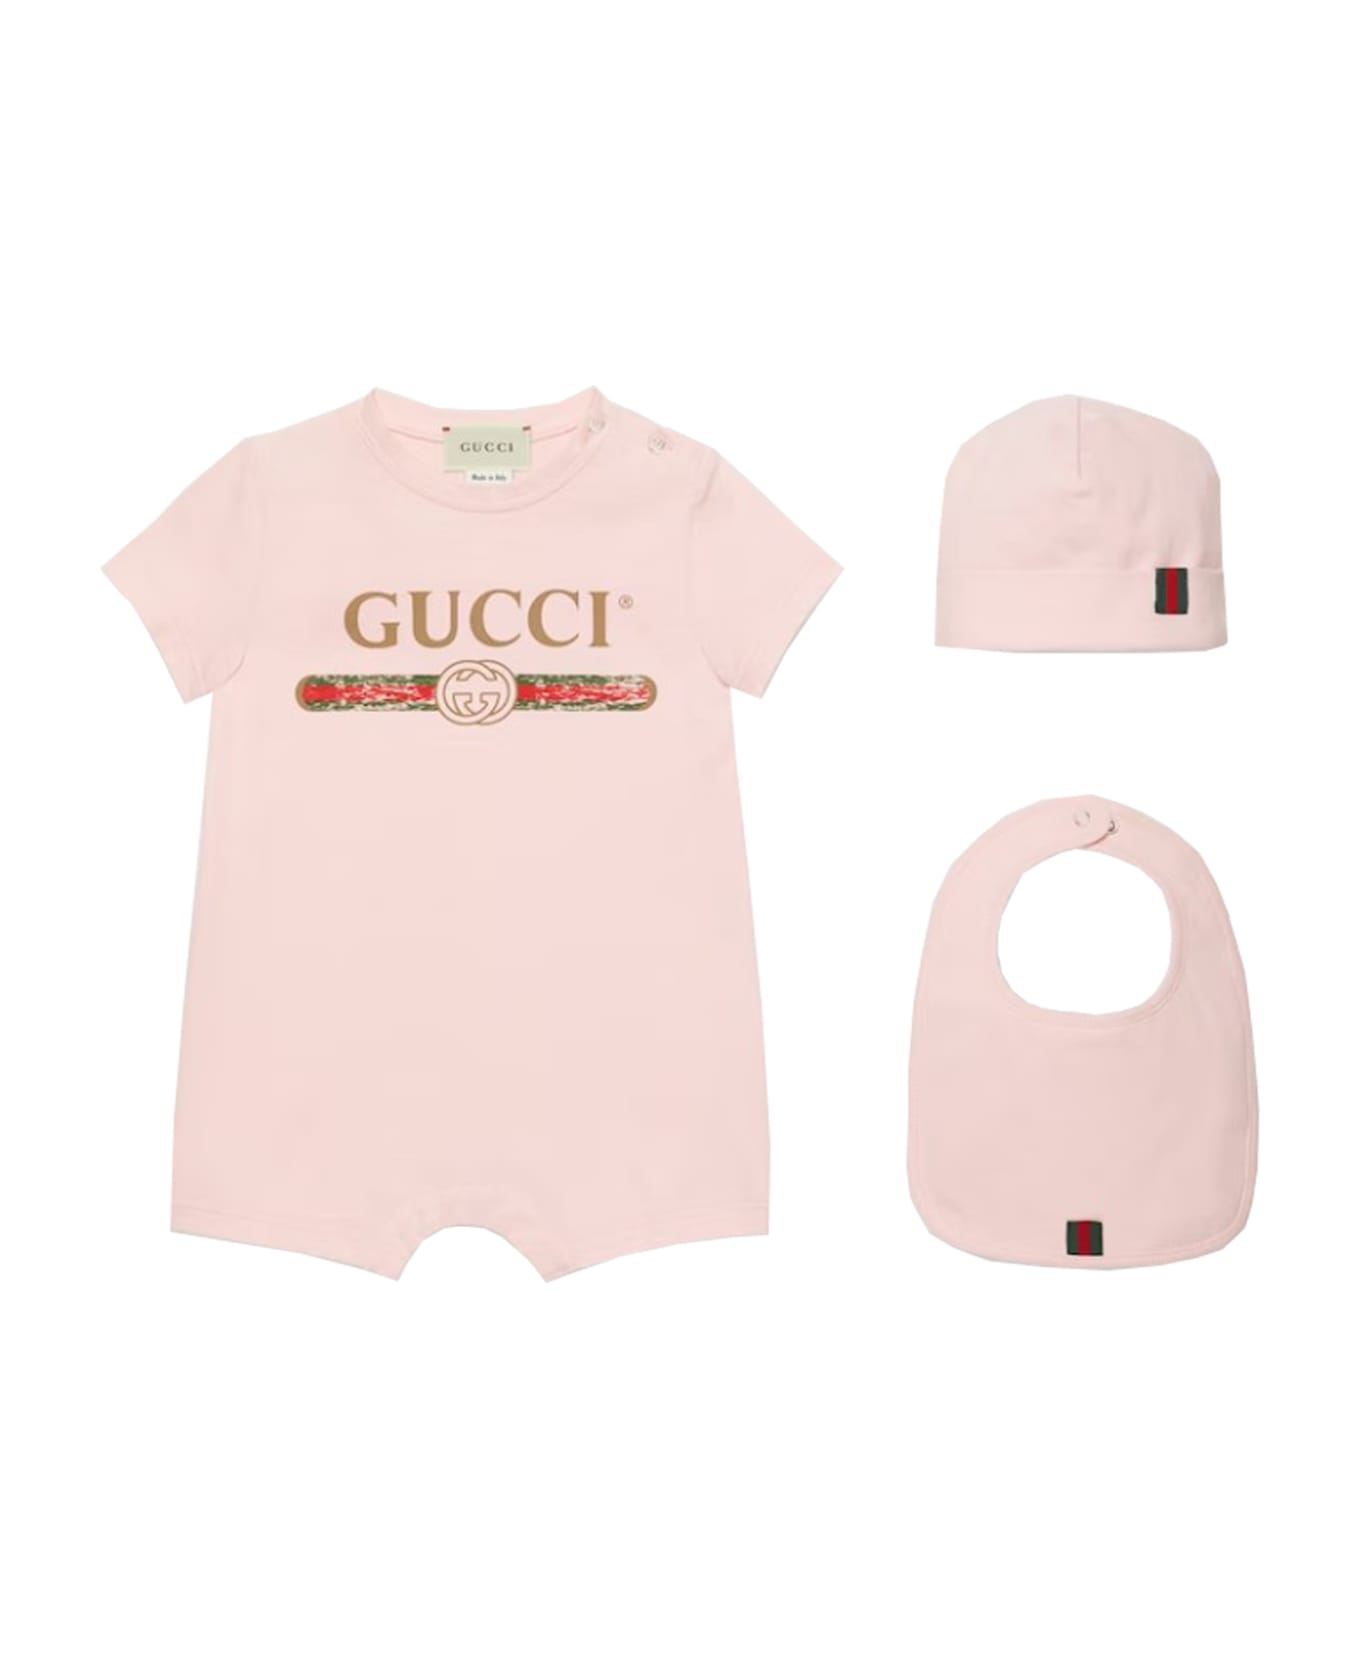 Gucci Gift Set - Rose